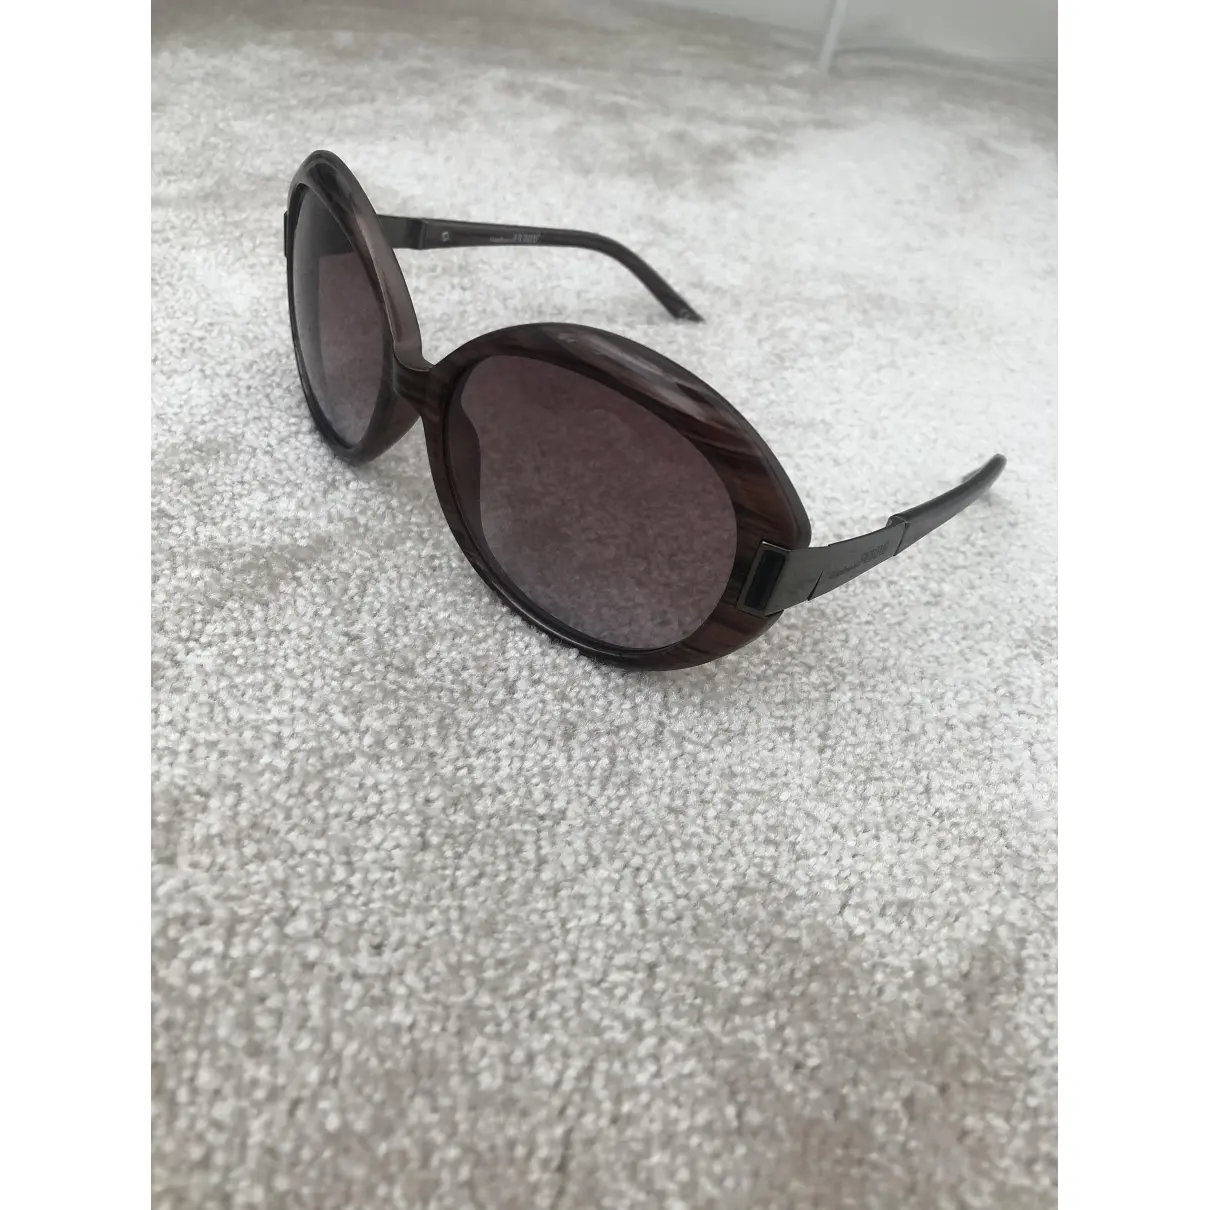 Buy Gianfranco Ferré Oversized sunglasses online